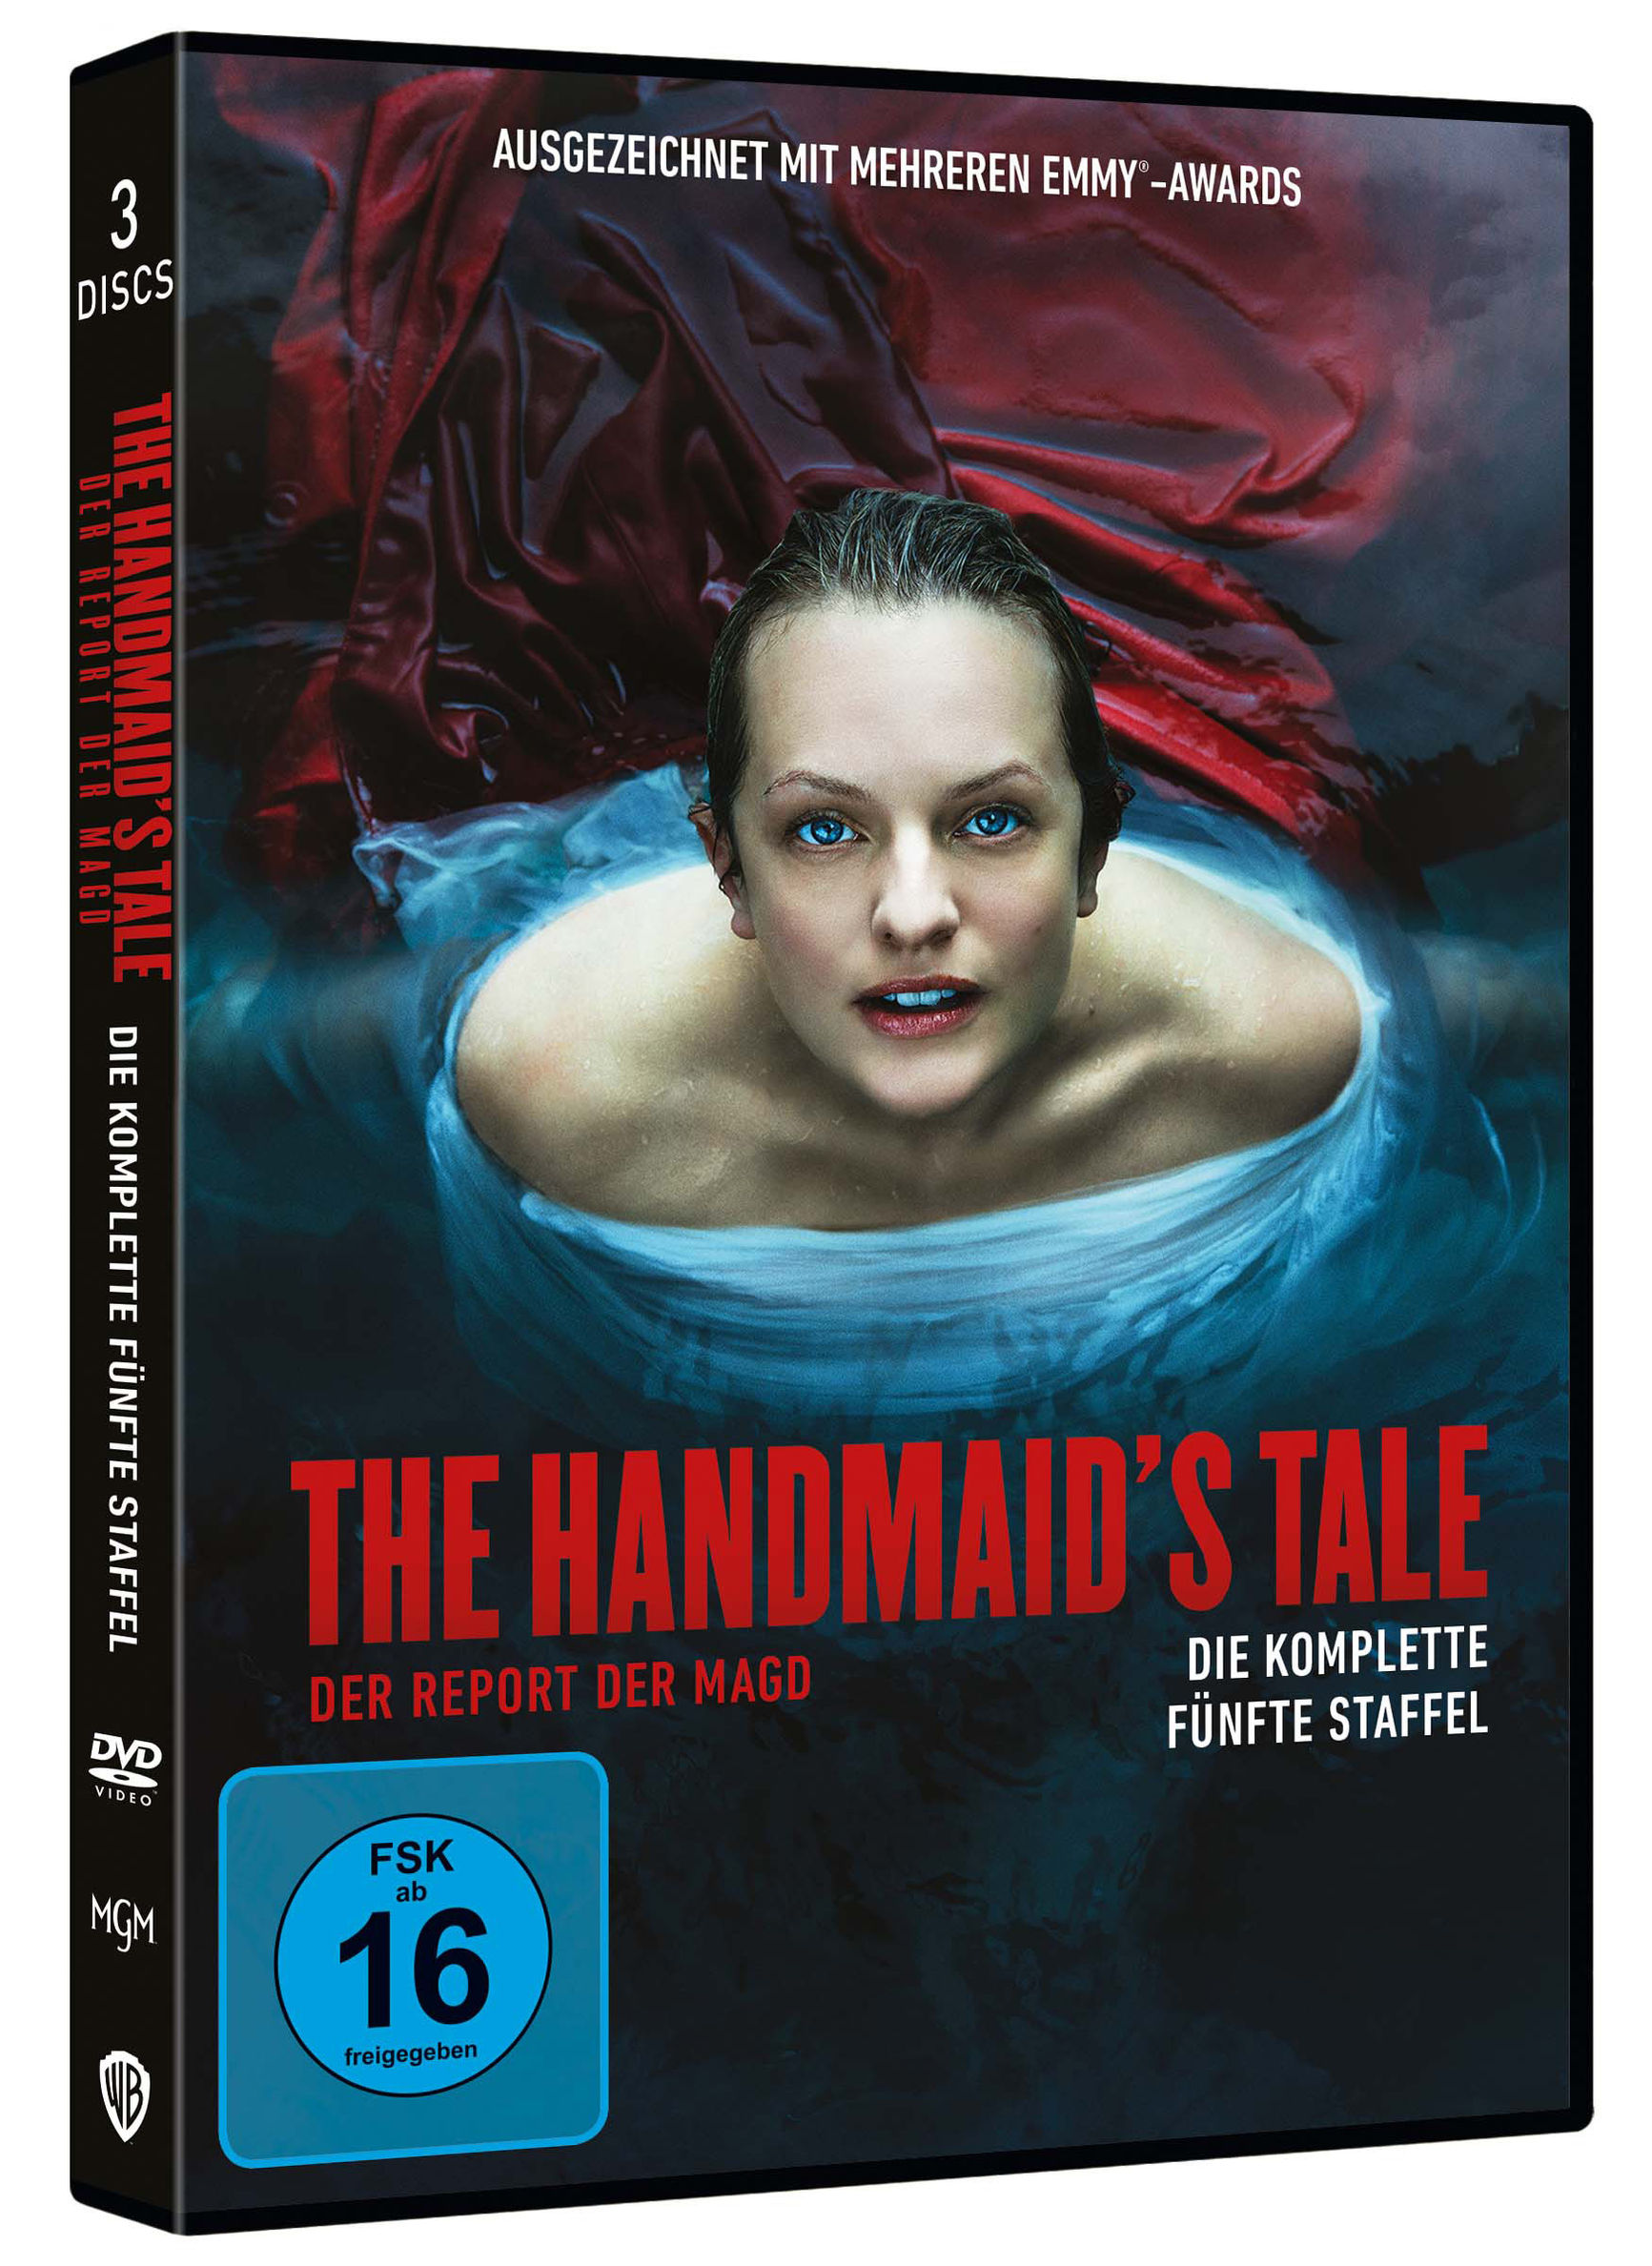 The Handmaid's Tale - Season 5 DVD bei Weltbild.de bestellen